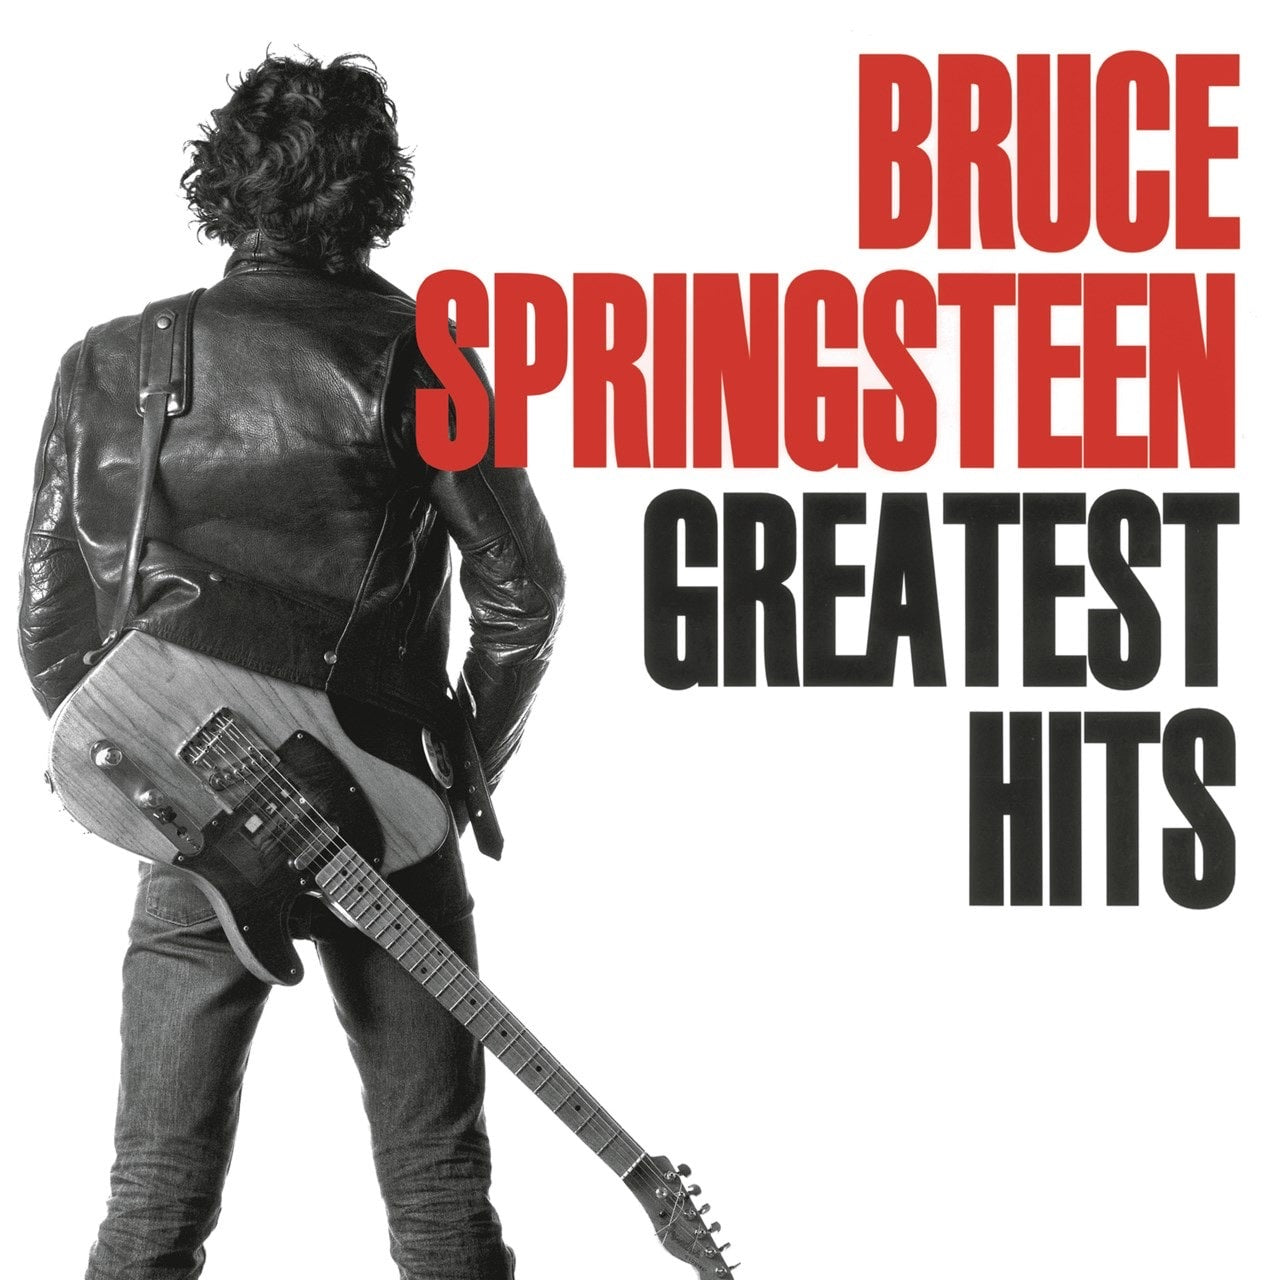 Bruce Springsteen - Greatest Hits (2LP Gatefold Sleeve)